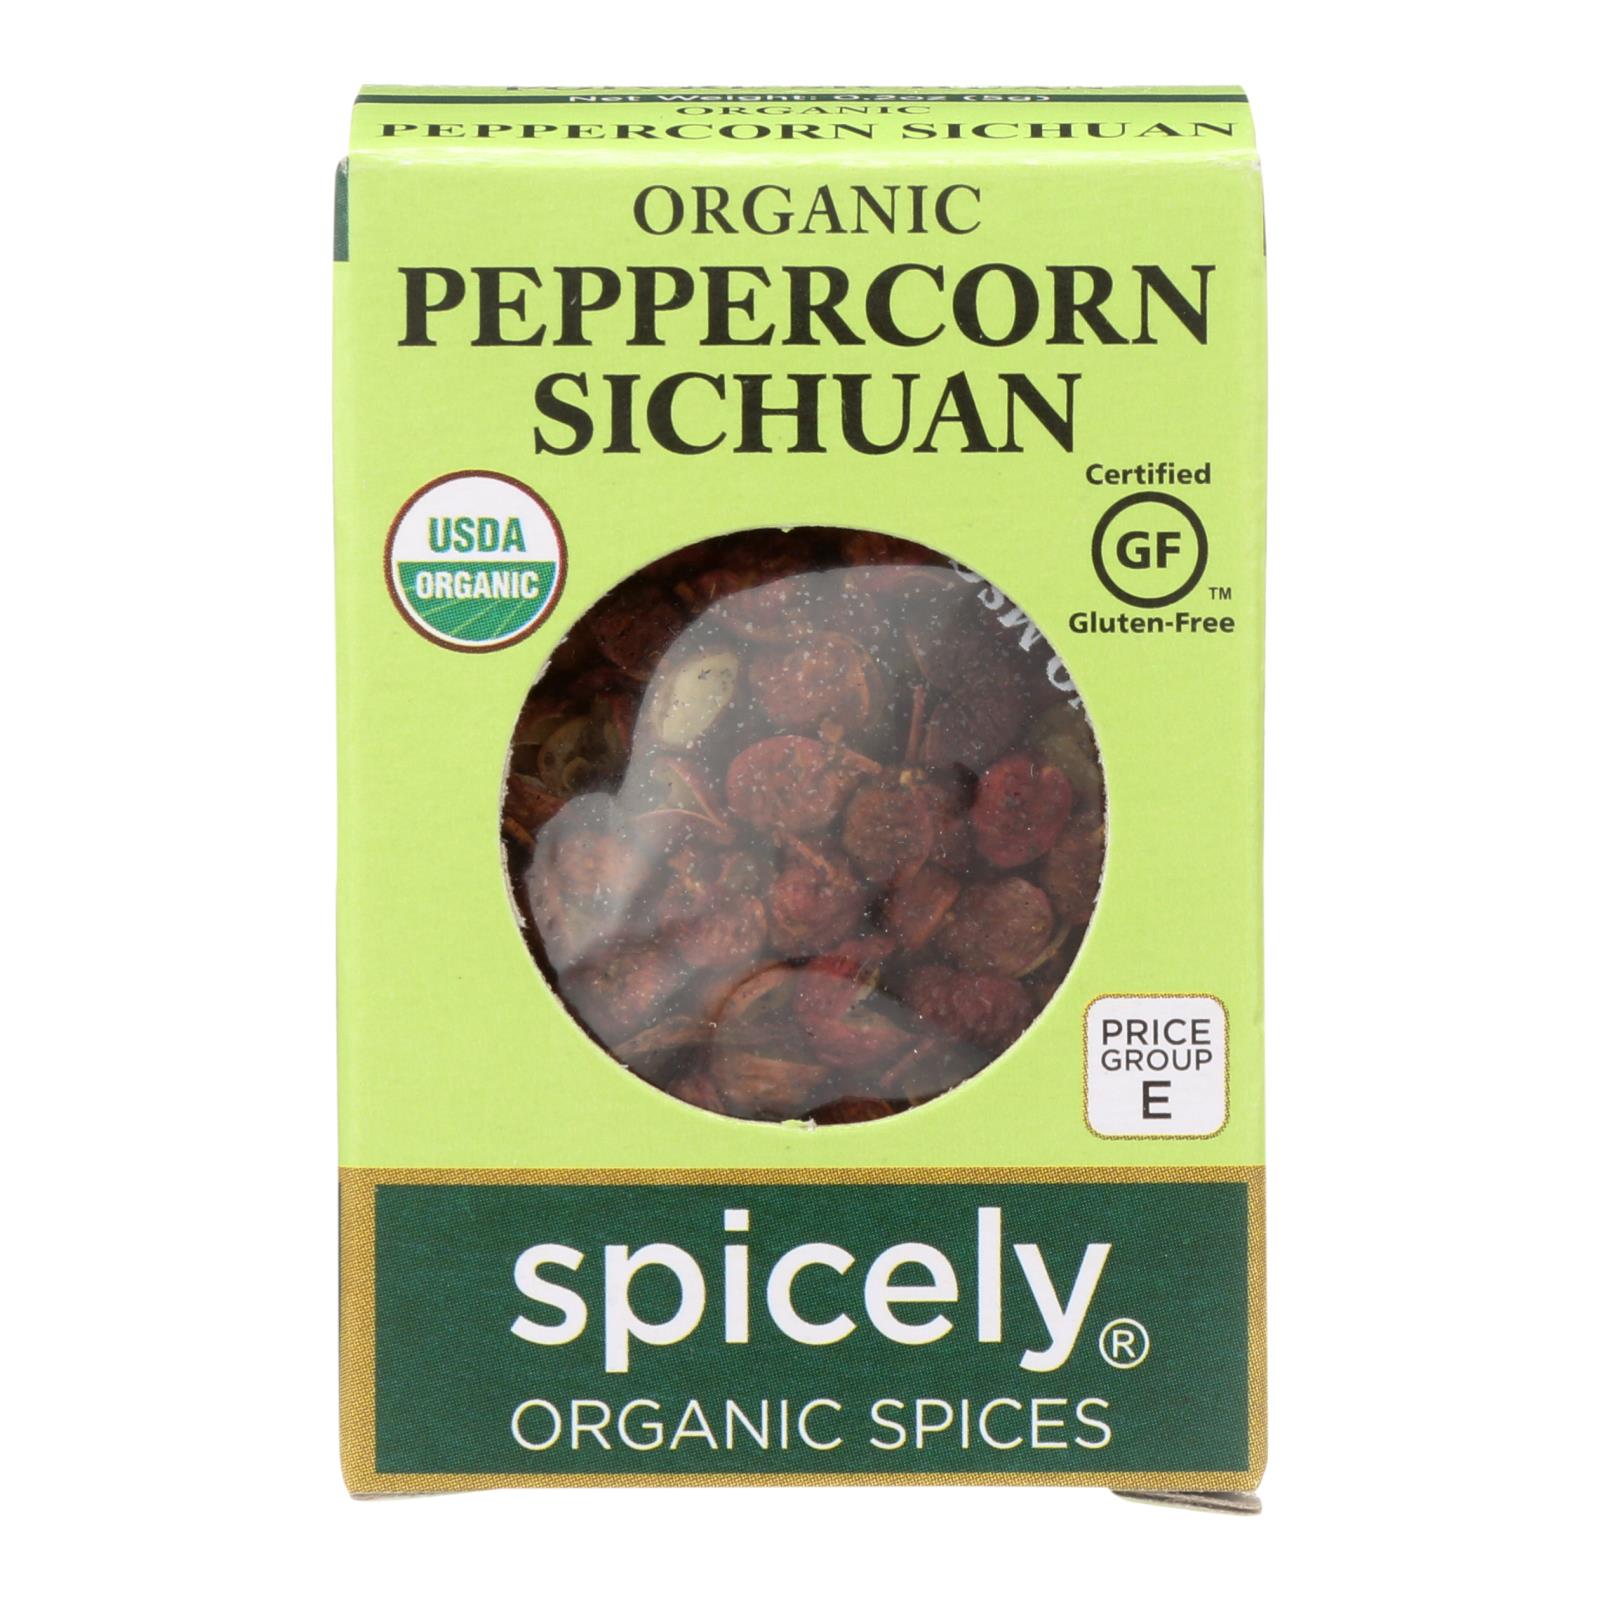 Spicely Organics - Organic Peppercorn - Sichuan - 6개 묶음상품 - 0.2 oz.